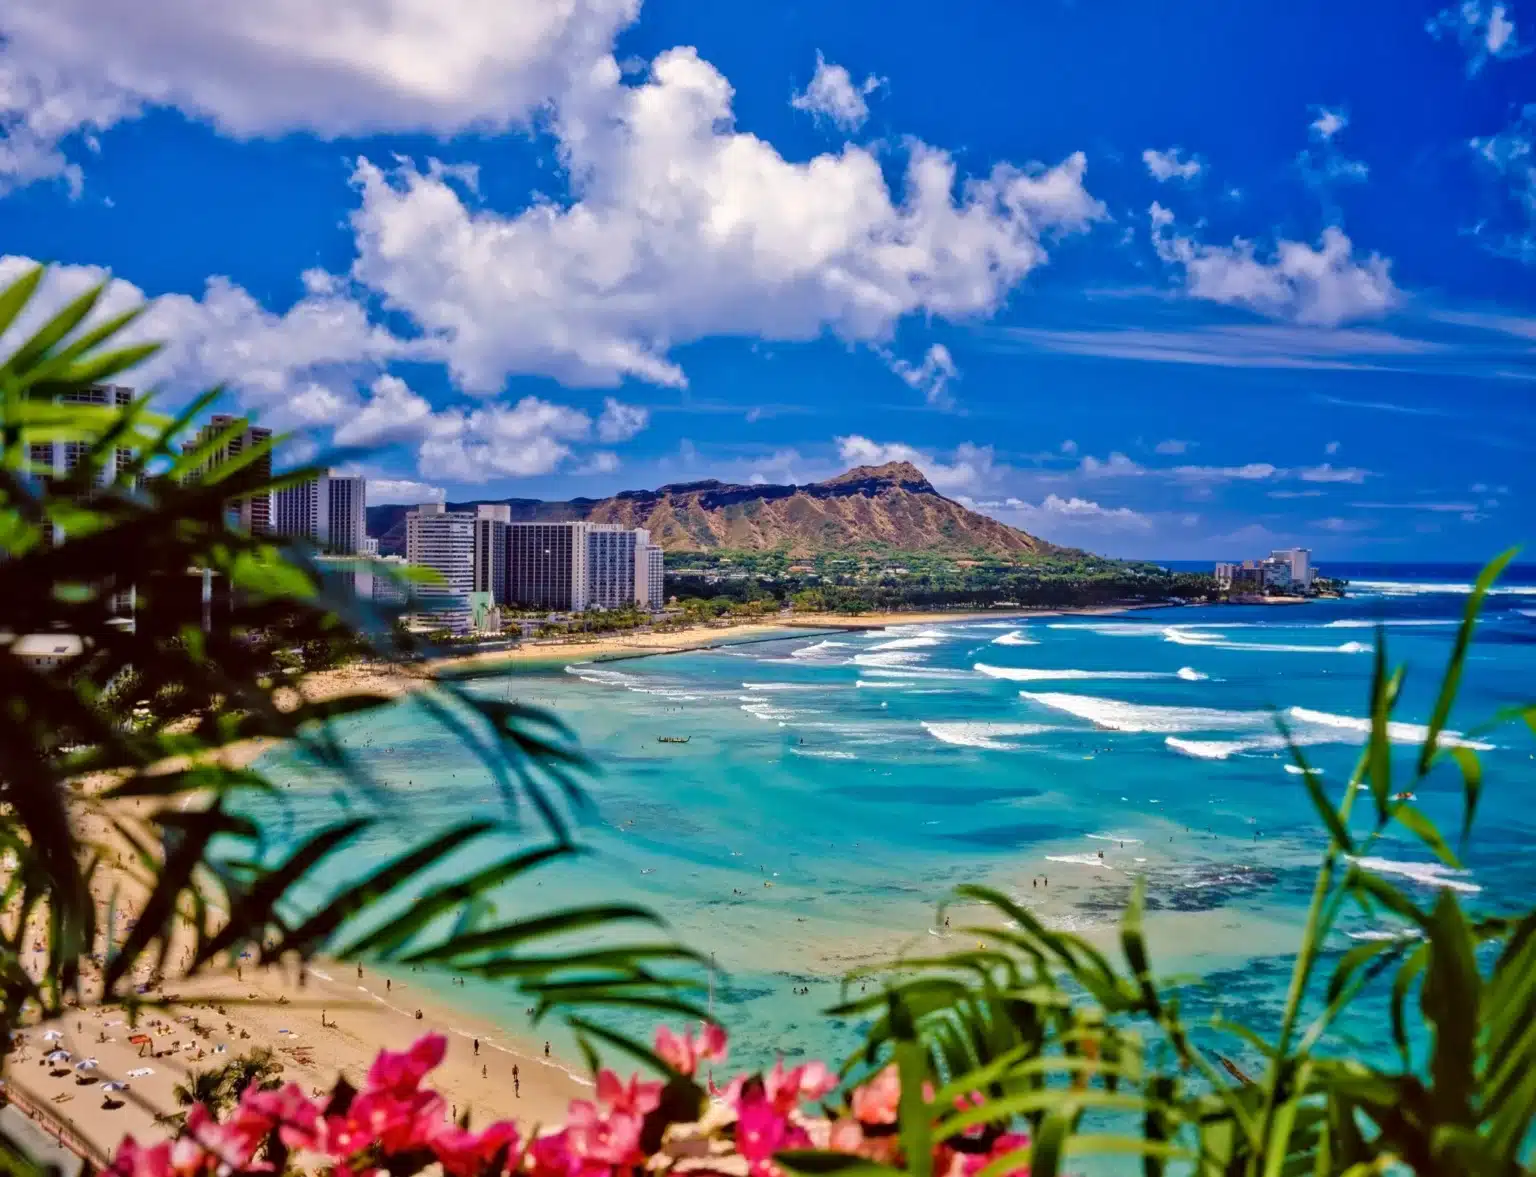 Waikiki Beach: Beach Attraction in the town of Honolulu on Oahu